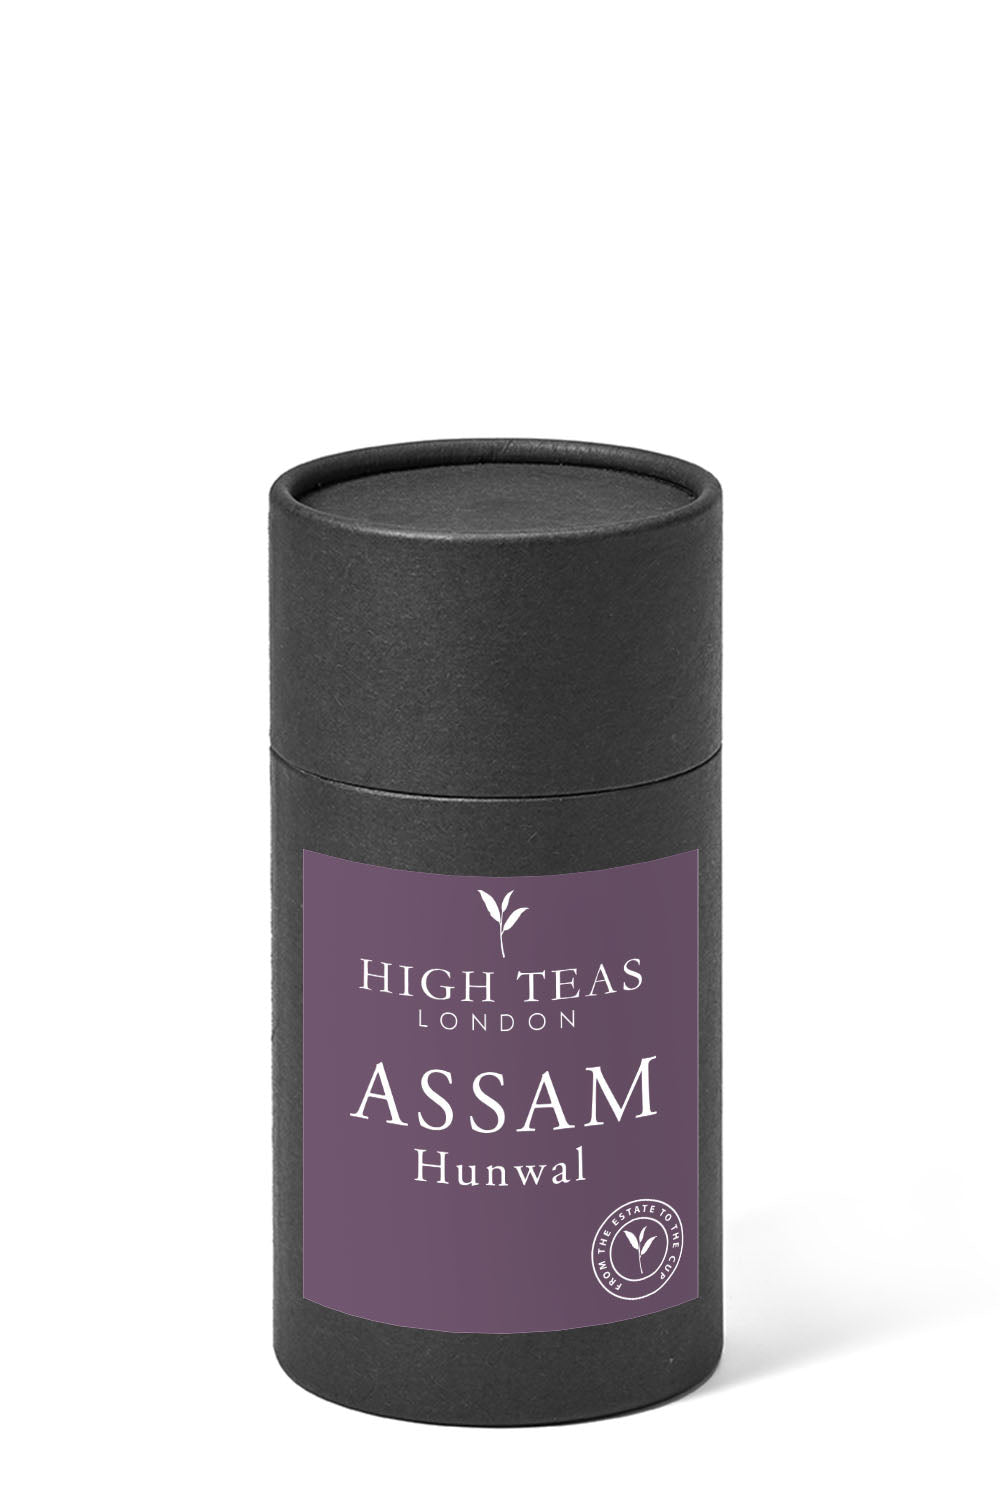 Assam Hunwal 2nd flush-60g gift-Loose Leaf Tea-High Teas